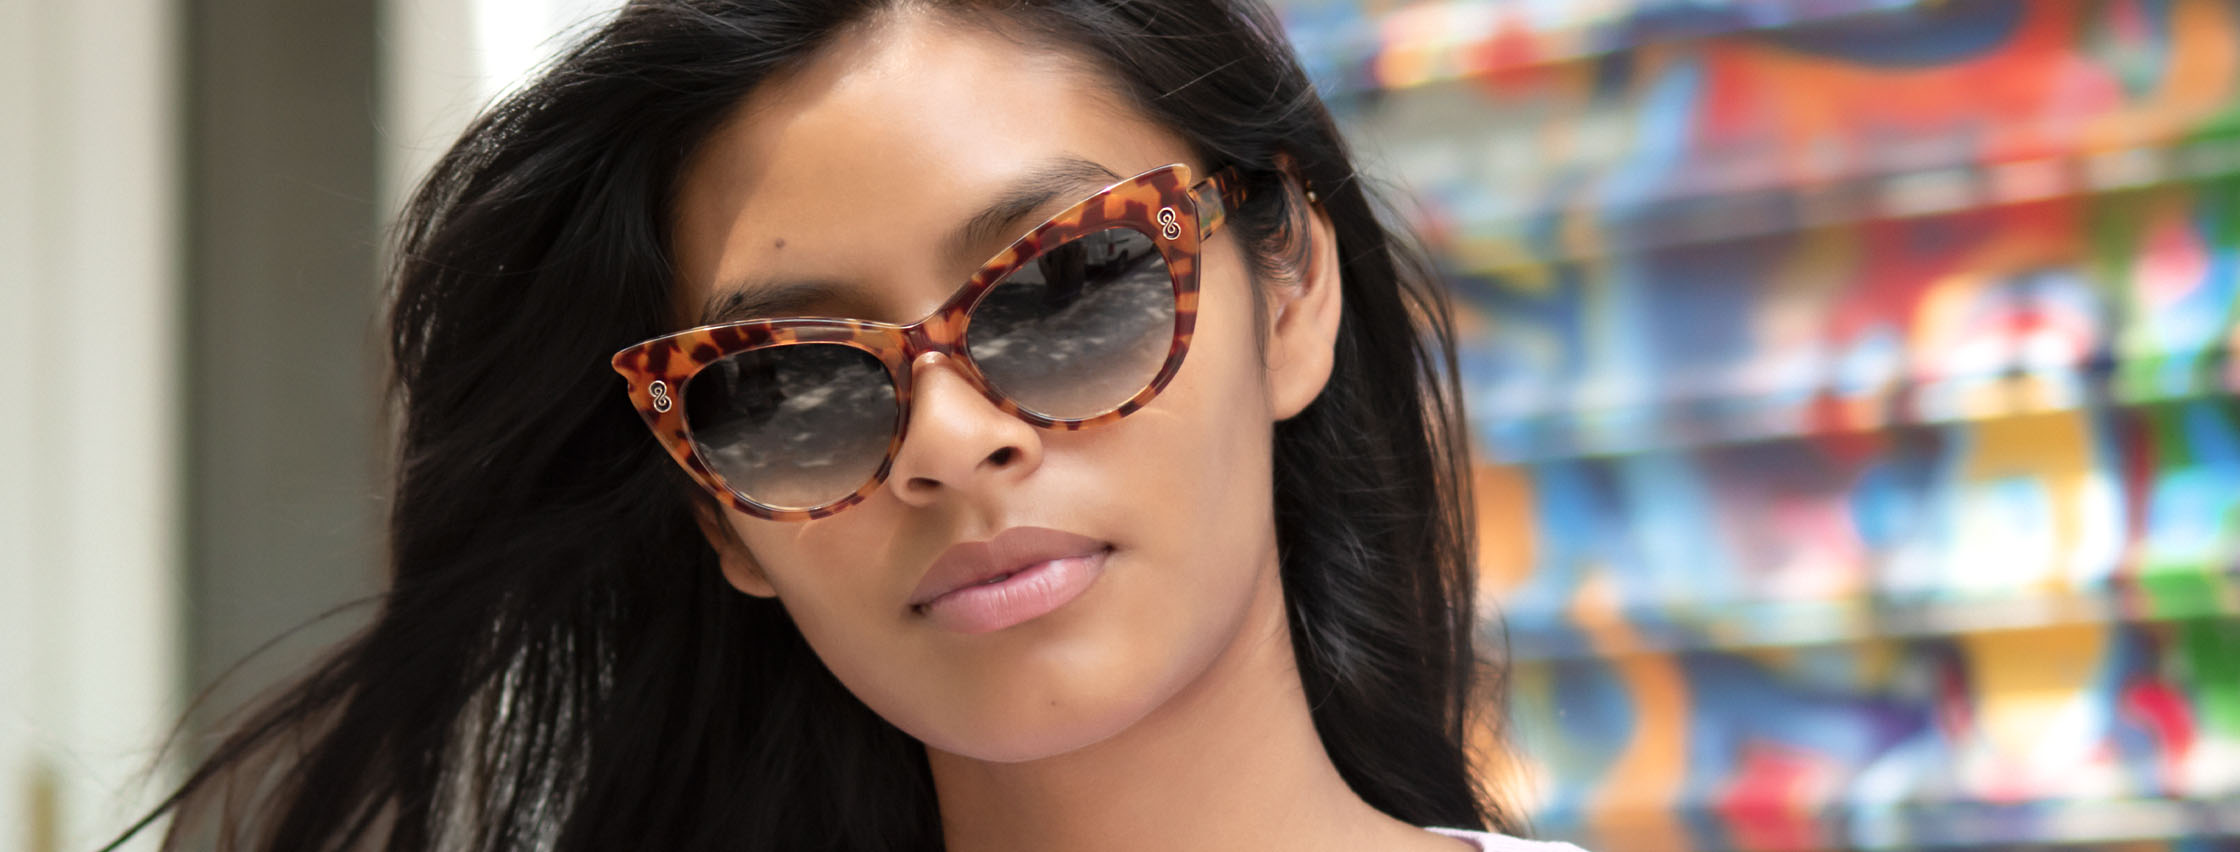 Unique Rainbow Square Sunglasses For Women New Fashion Brand Elegant Candy  Color Gradient Sun Glasses Feamle Small Shades Purple